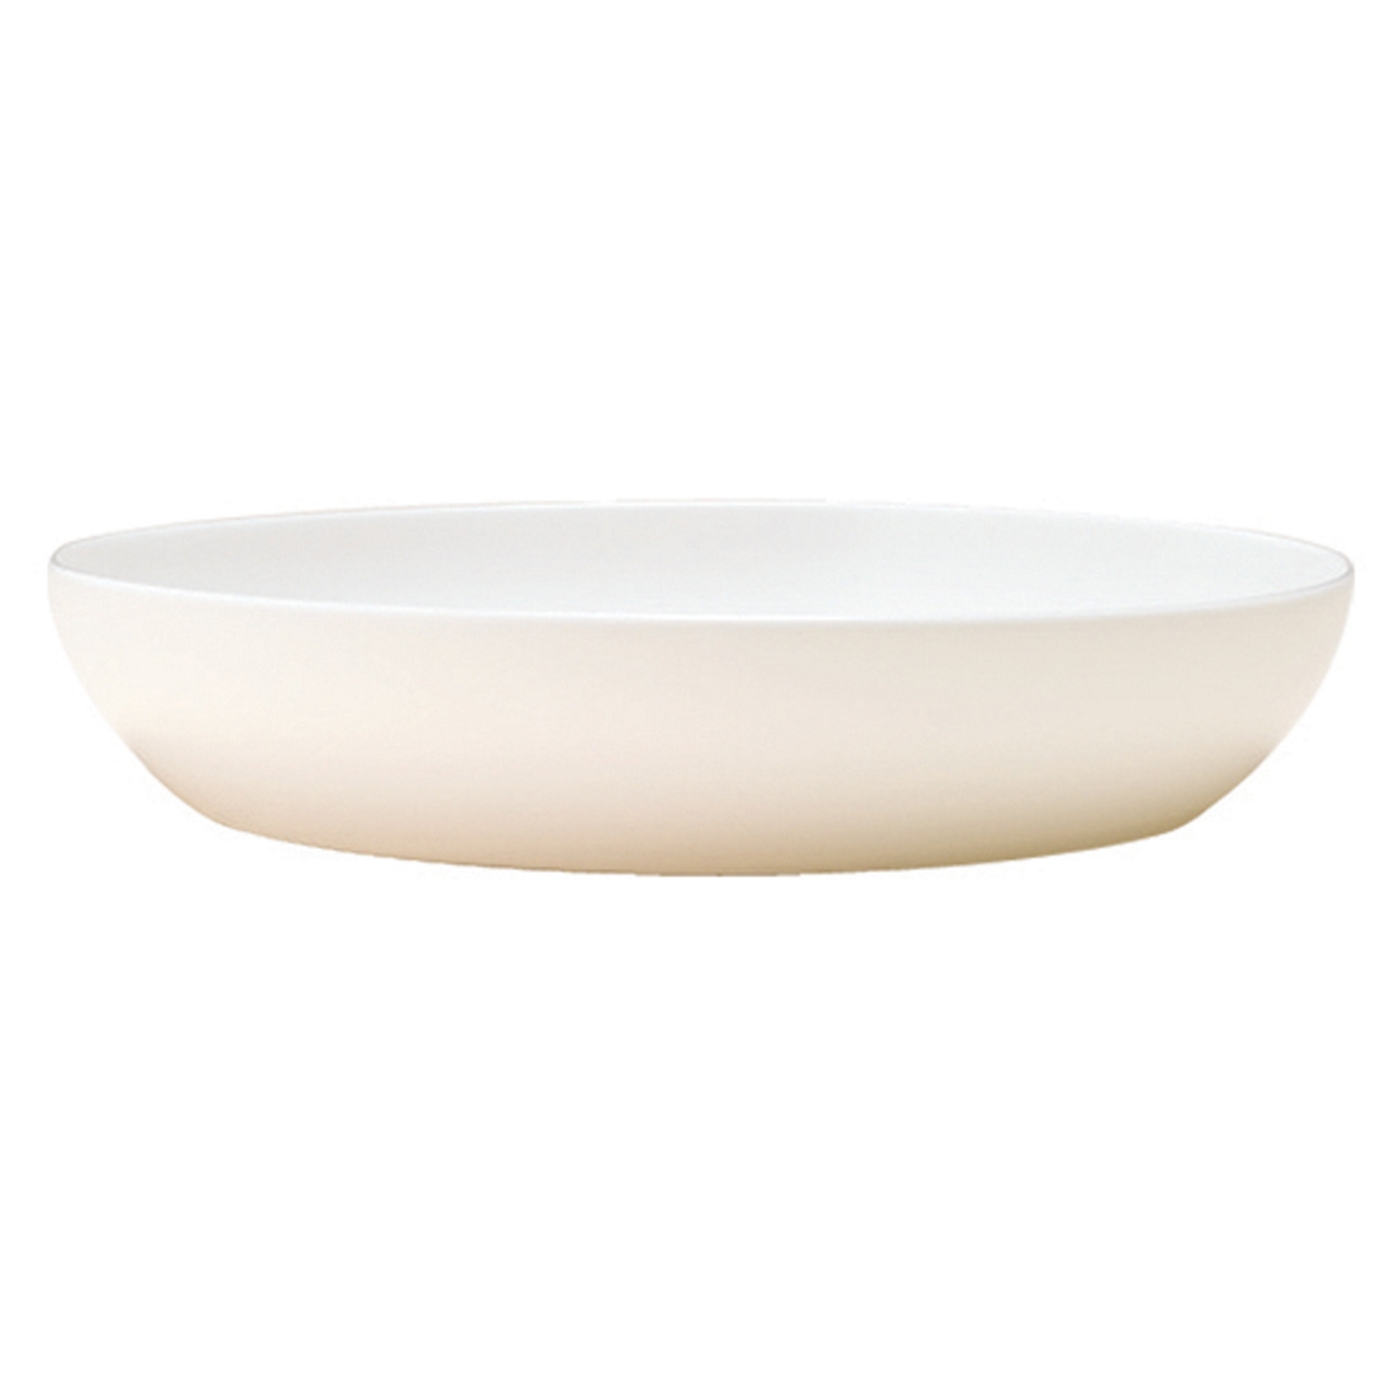 Denby Denby white bone china pasta bowl